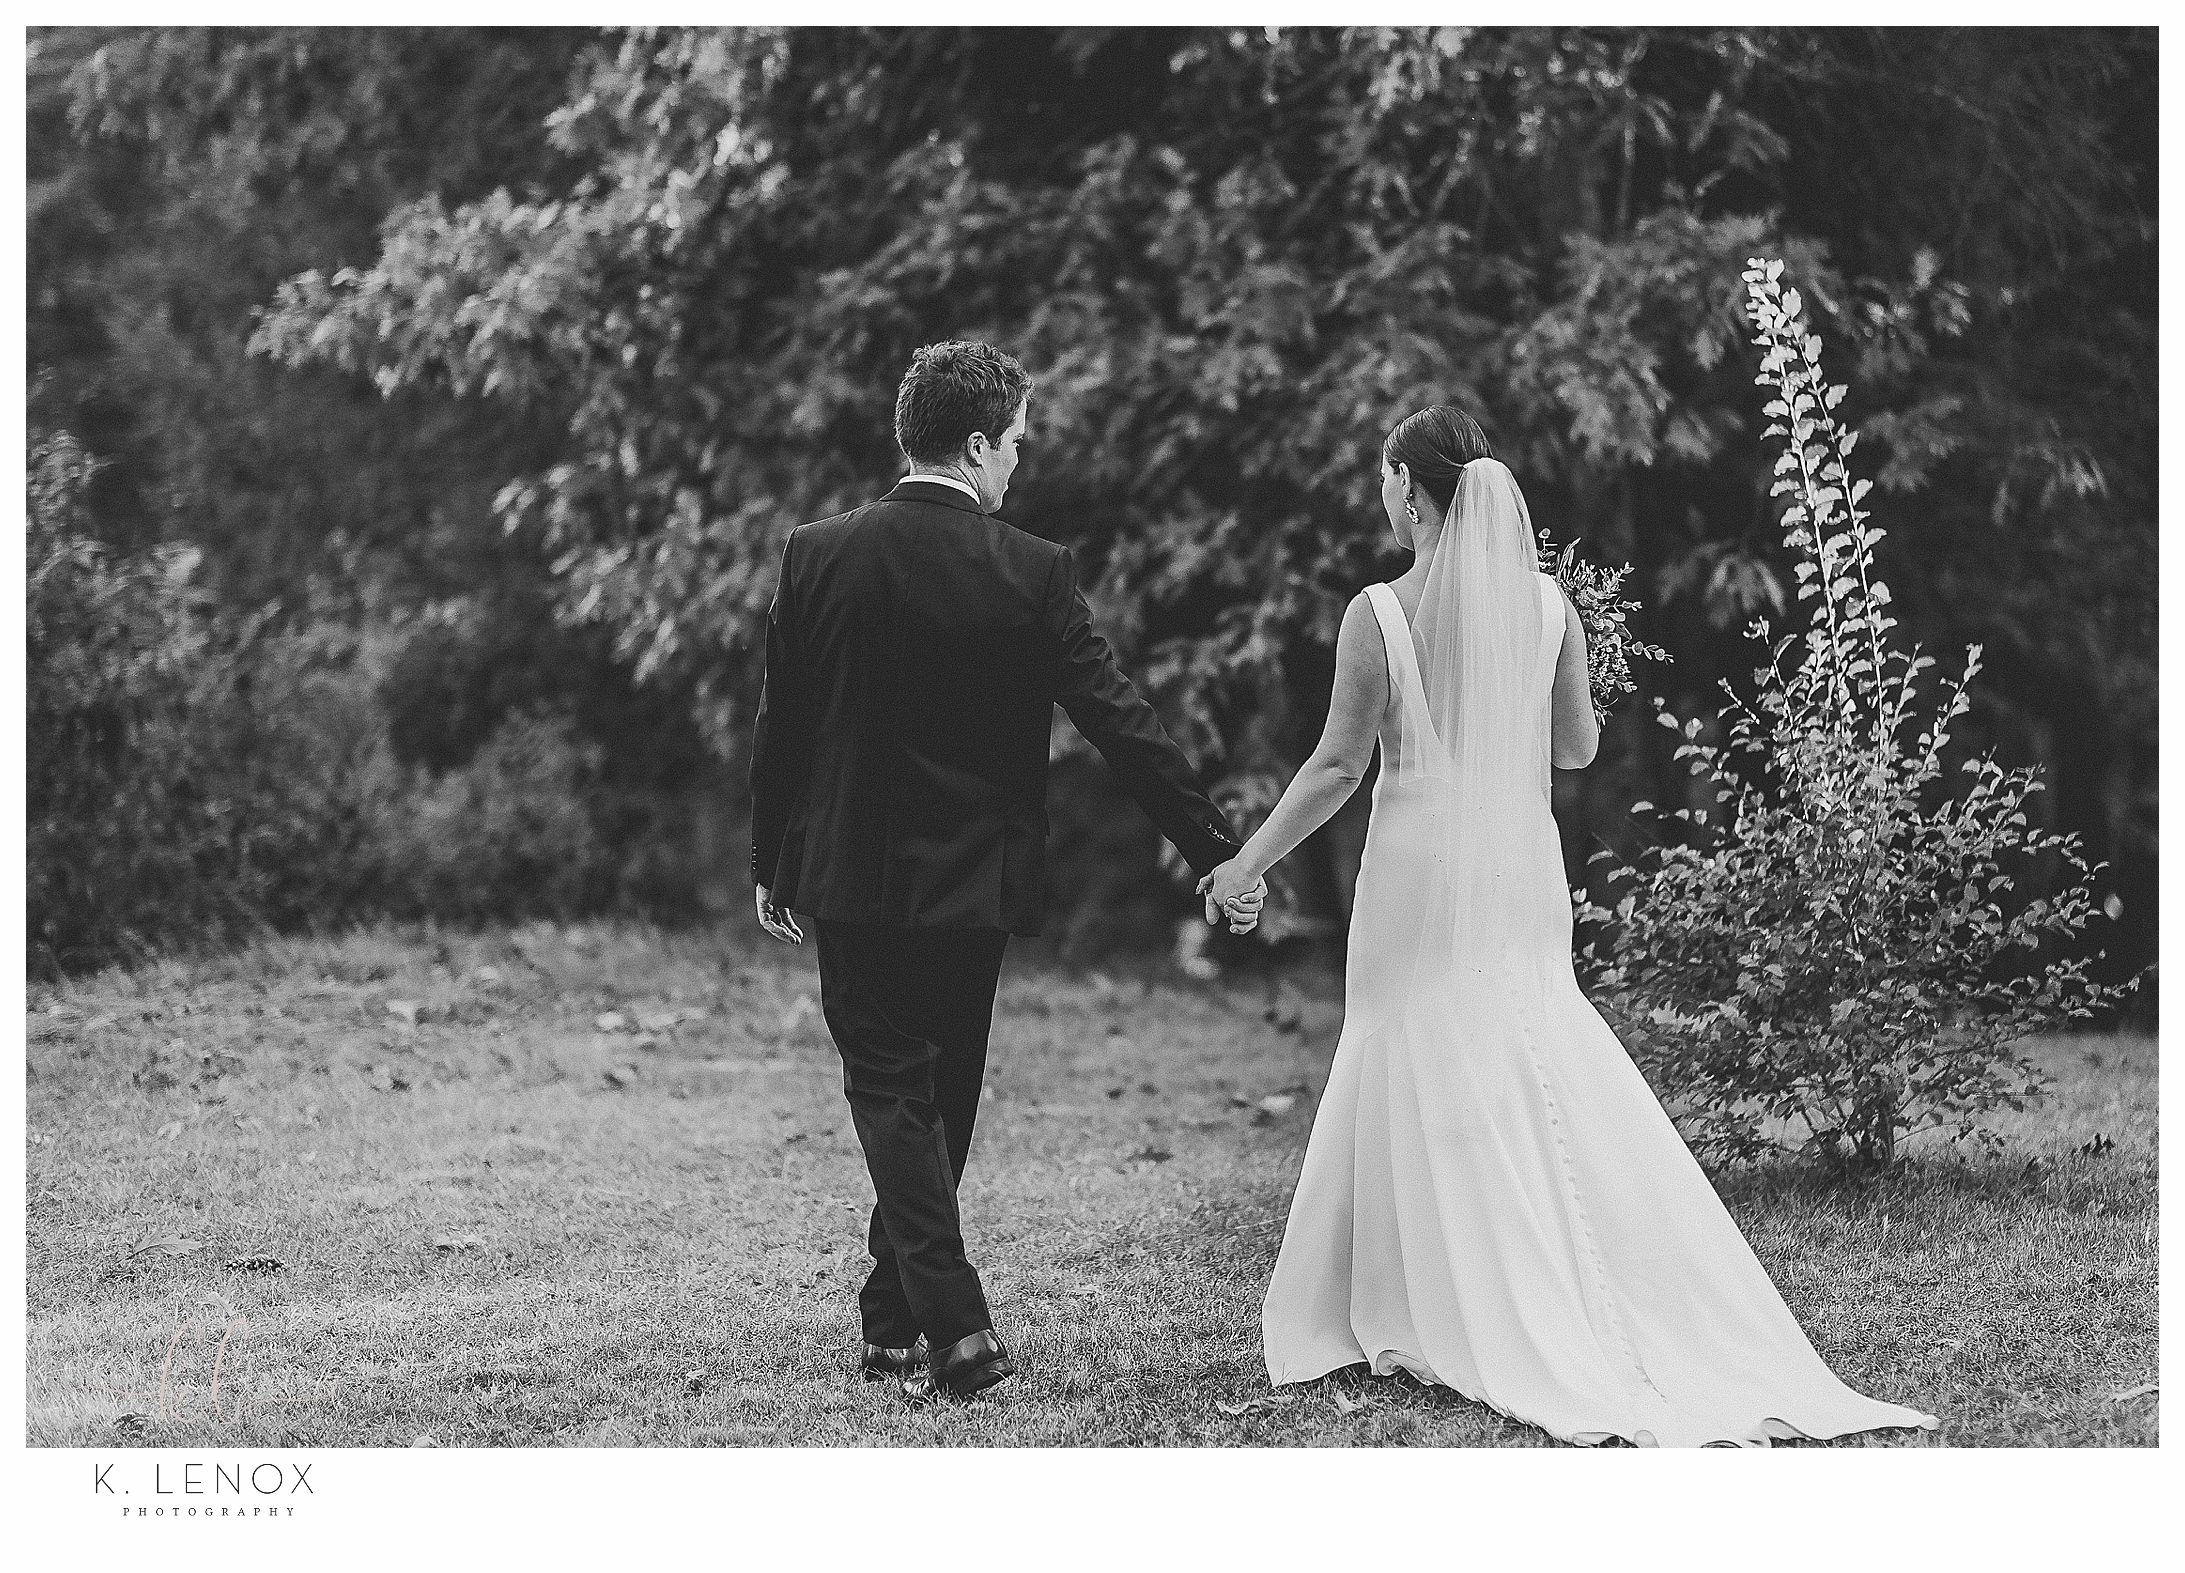 Simply Elegant Backyard Wedding- The bride and Groom